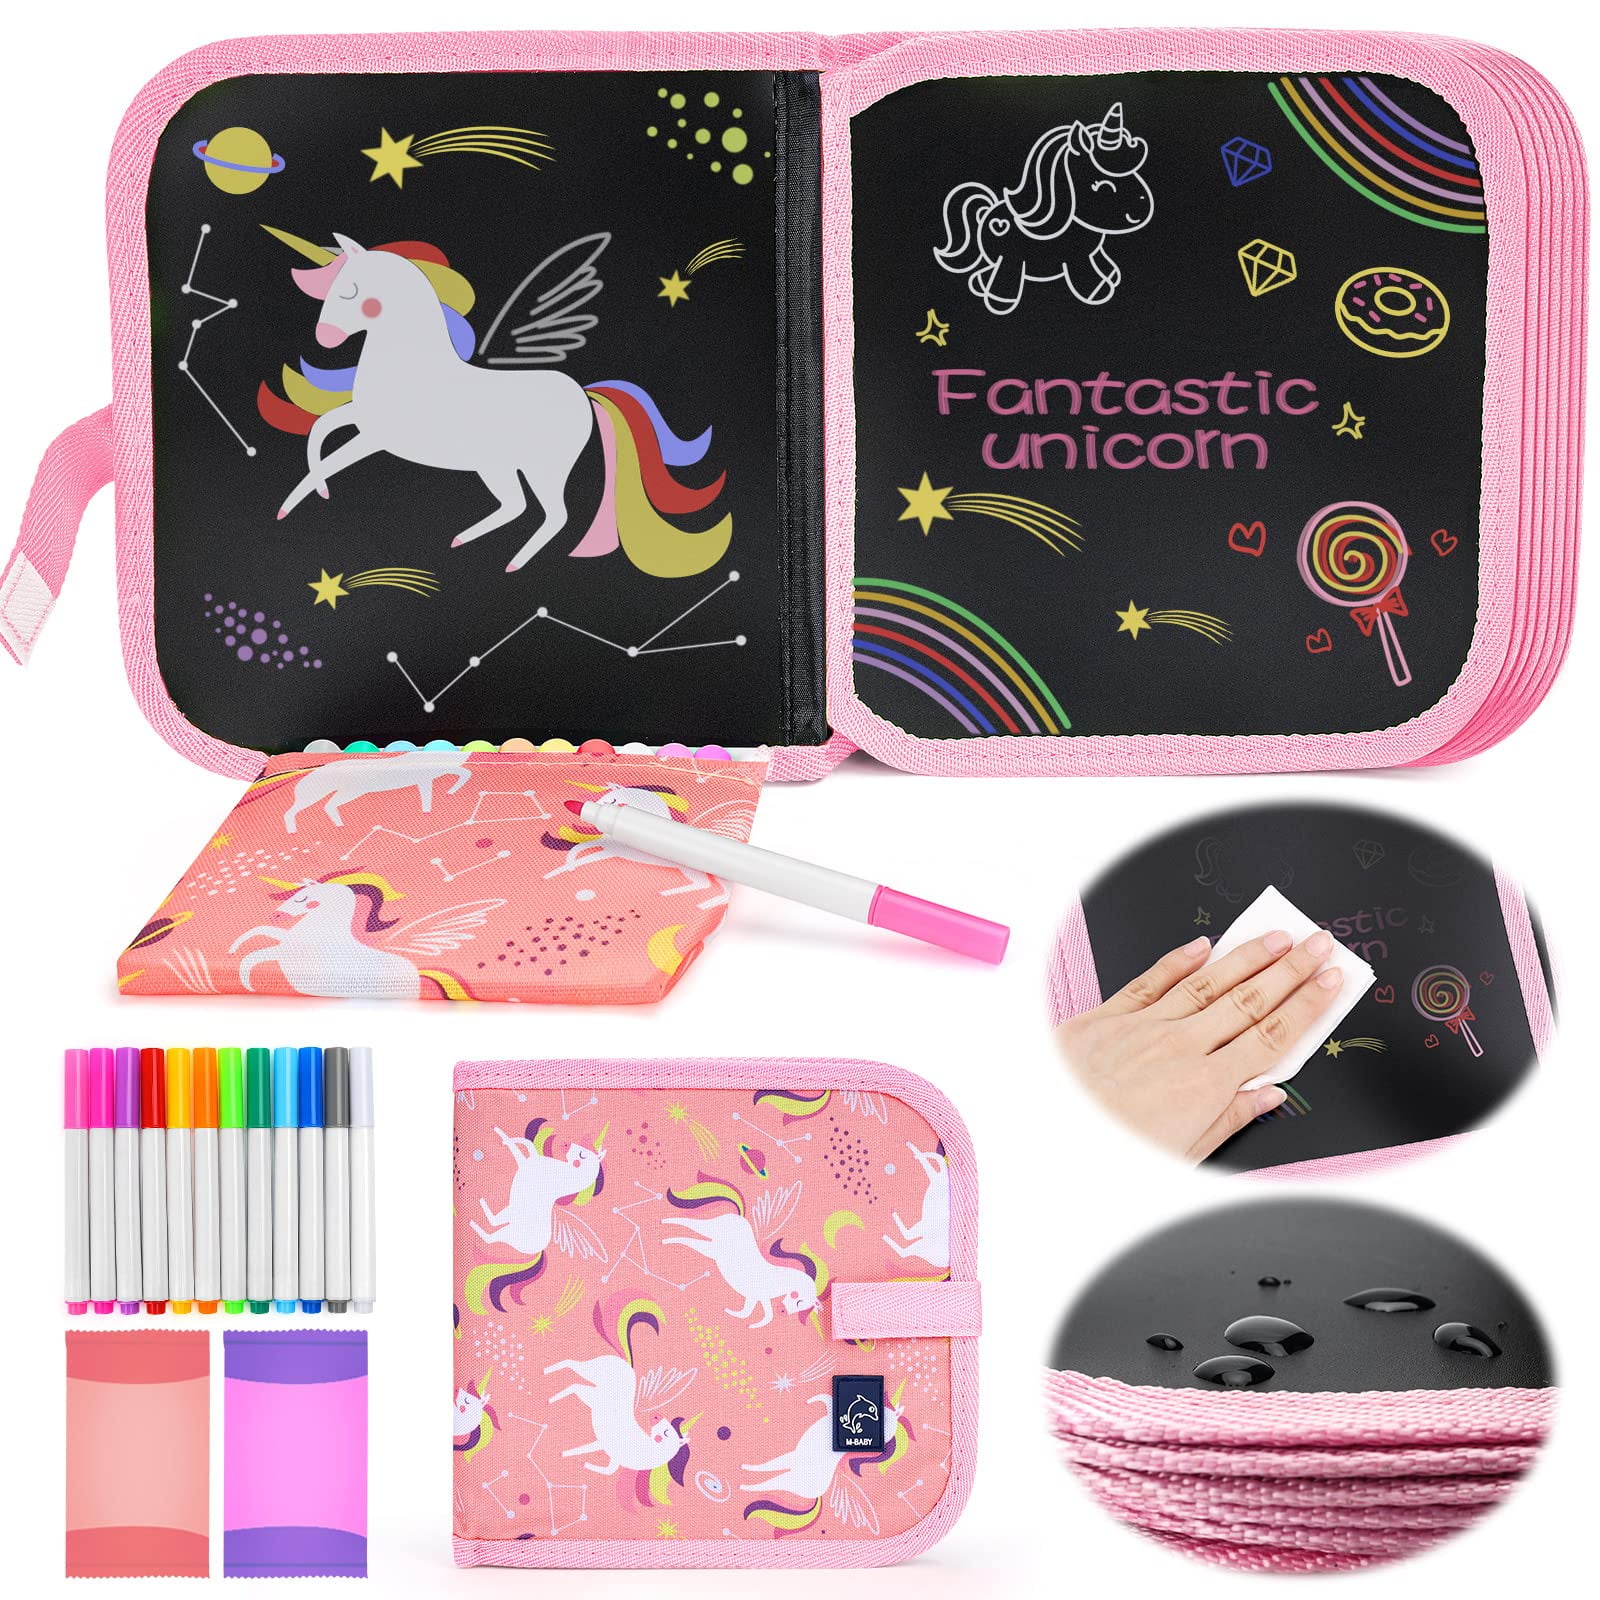 Pearoft Unicorn Gifts for Girls Age 5 6 7 8-Painting Unicorn Toys